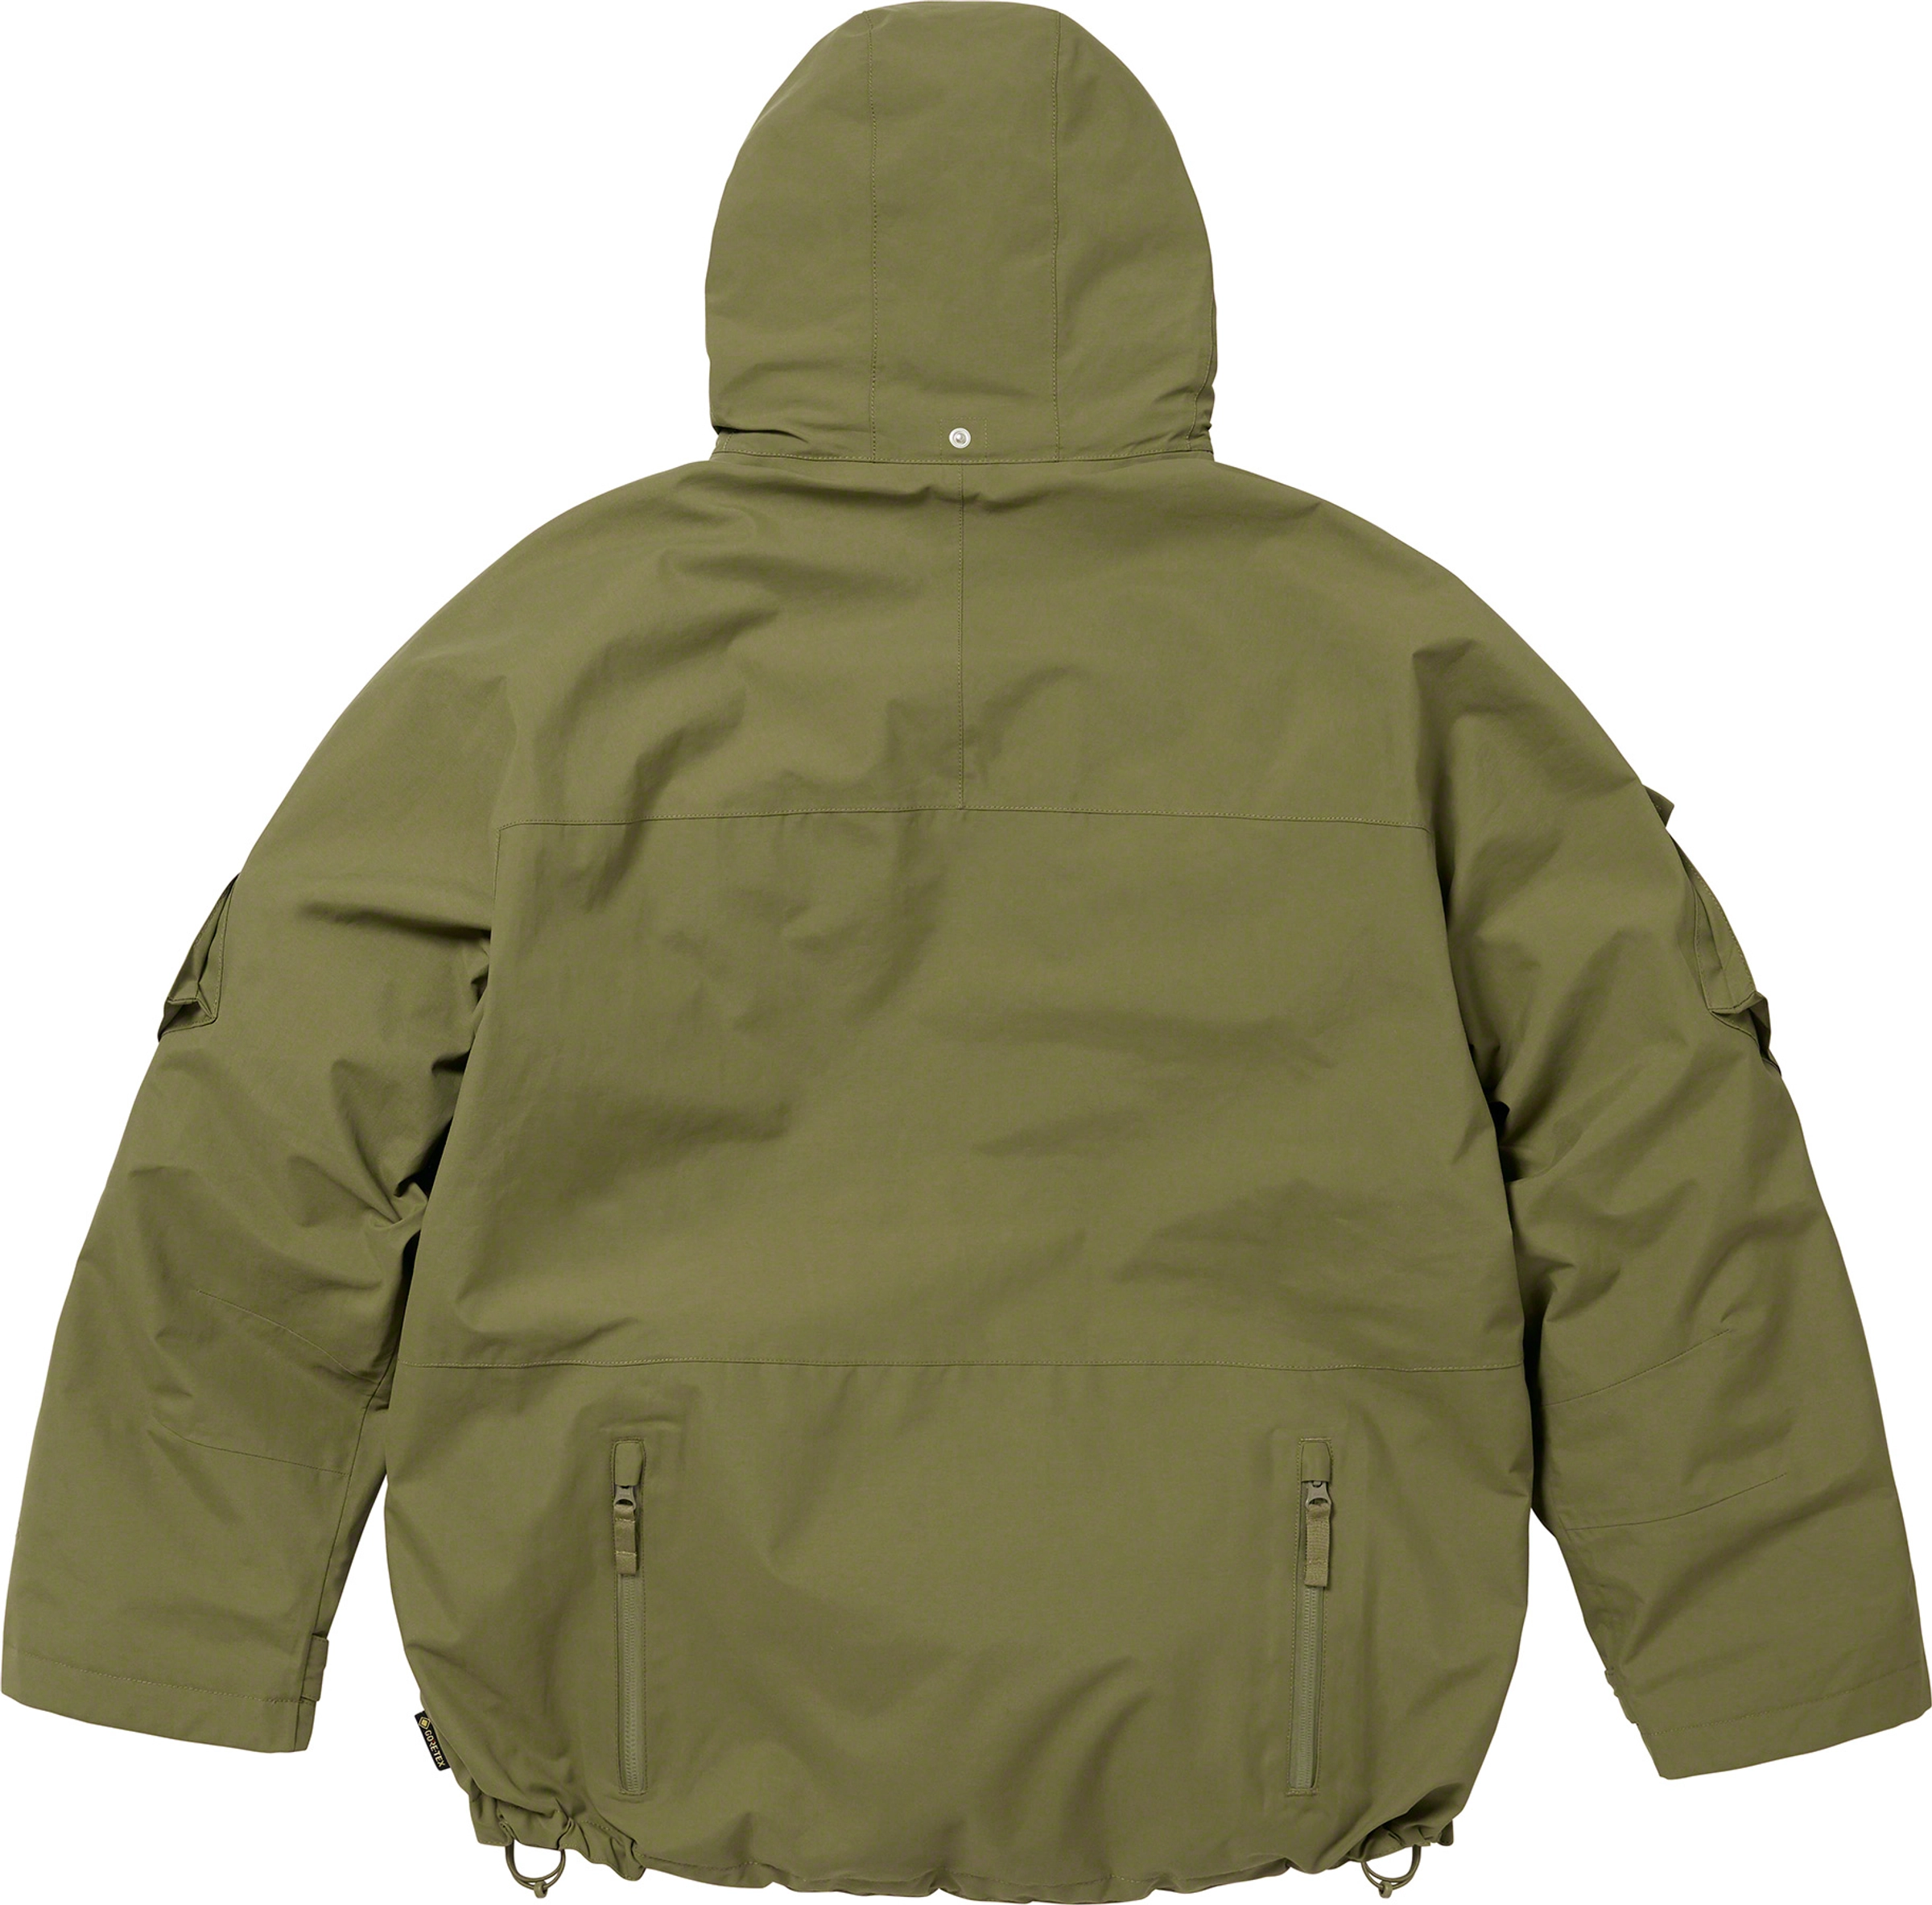 Supreme 2-in-1 GORE-TEX Polartec® Liner Jacket